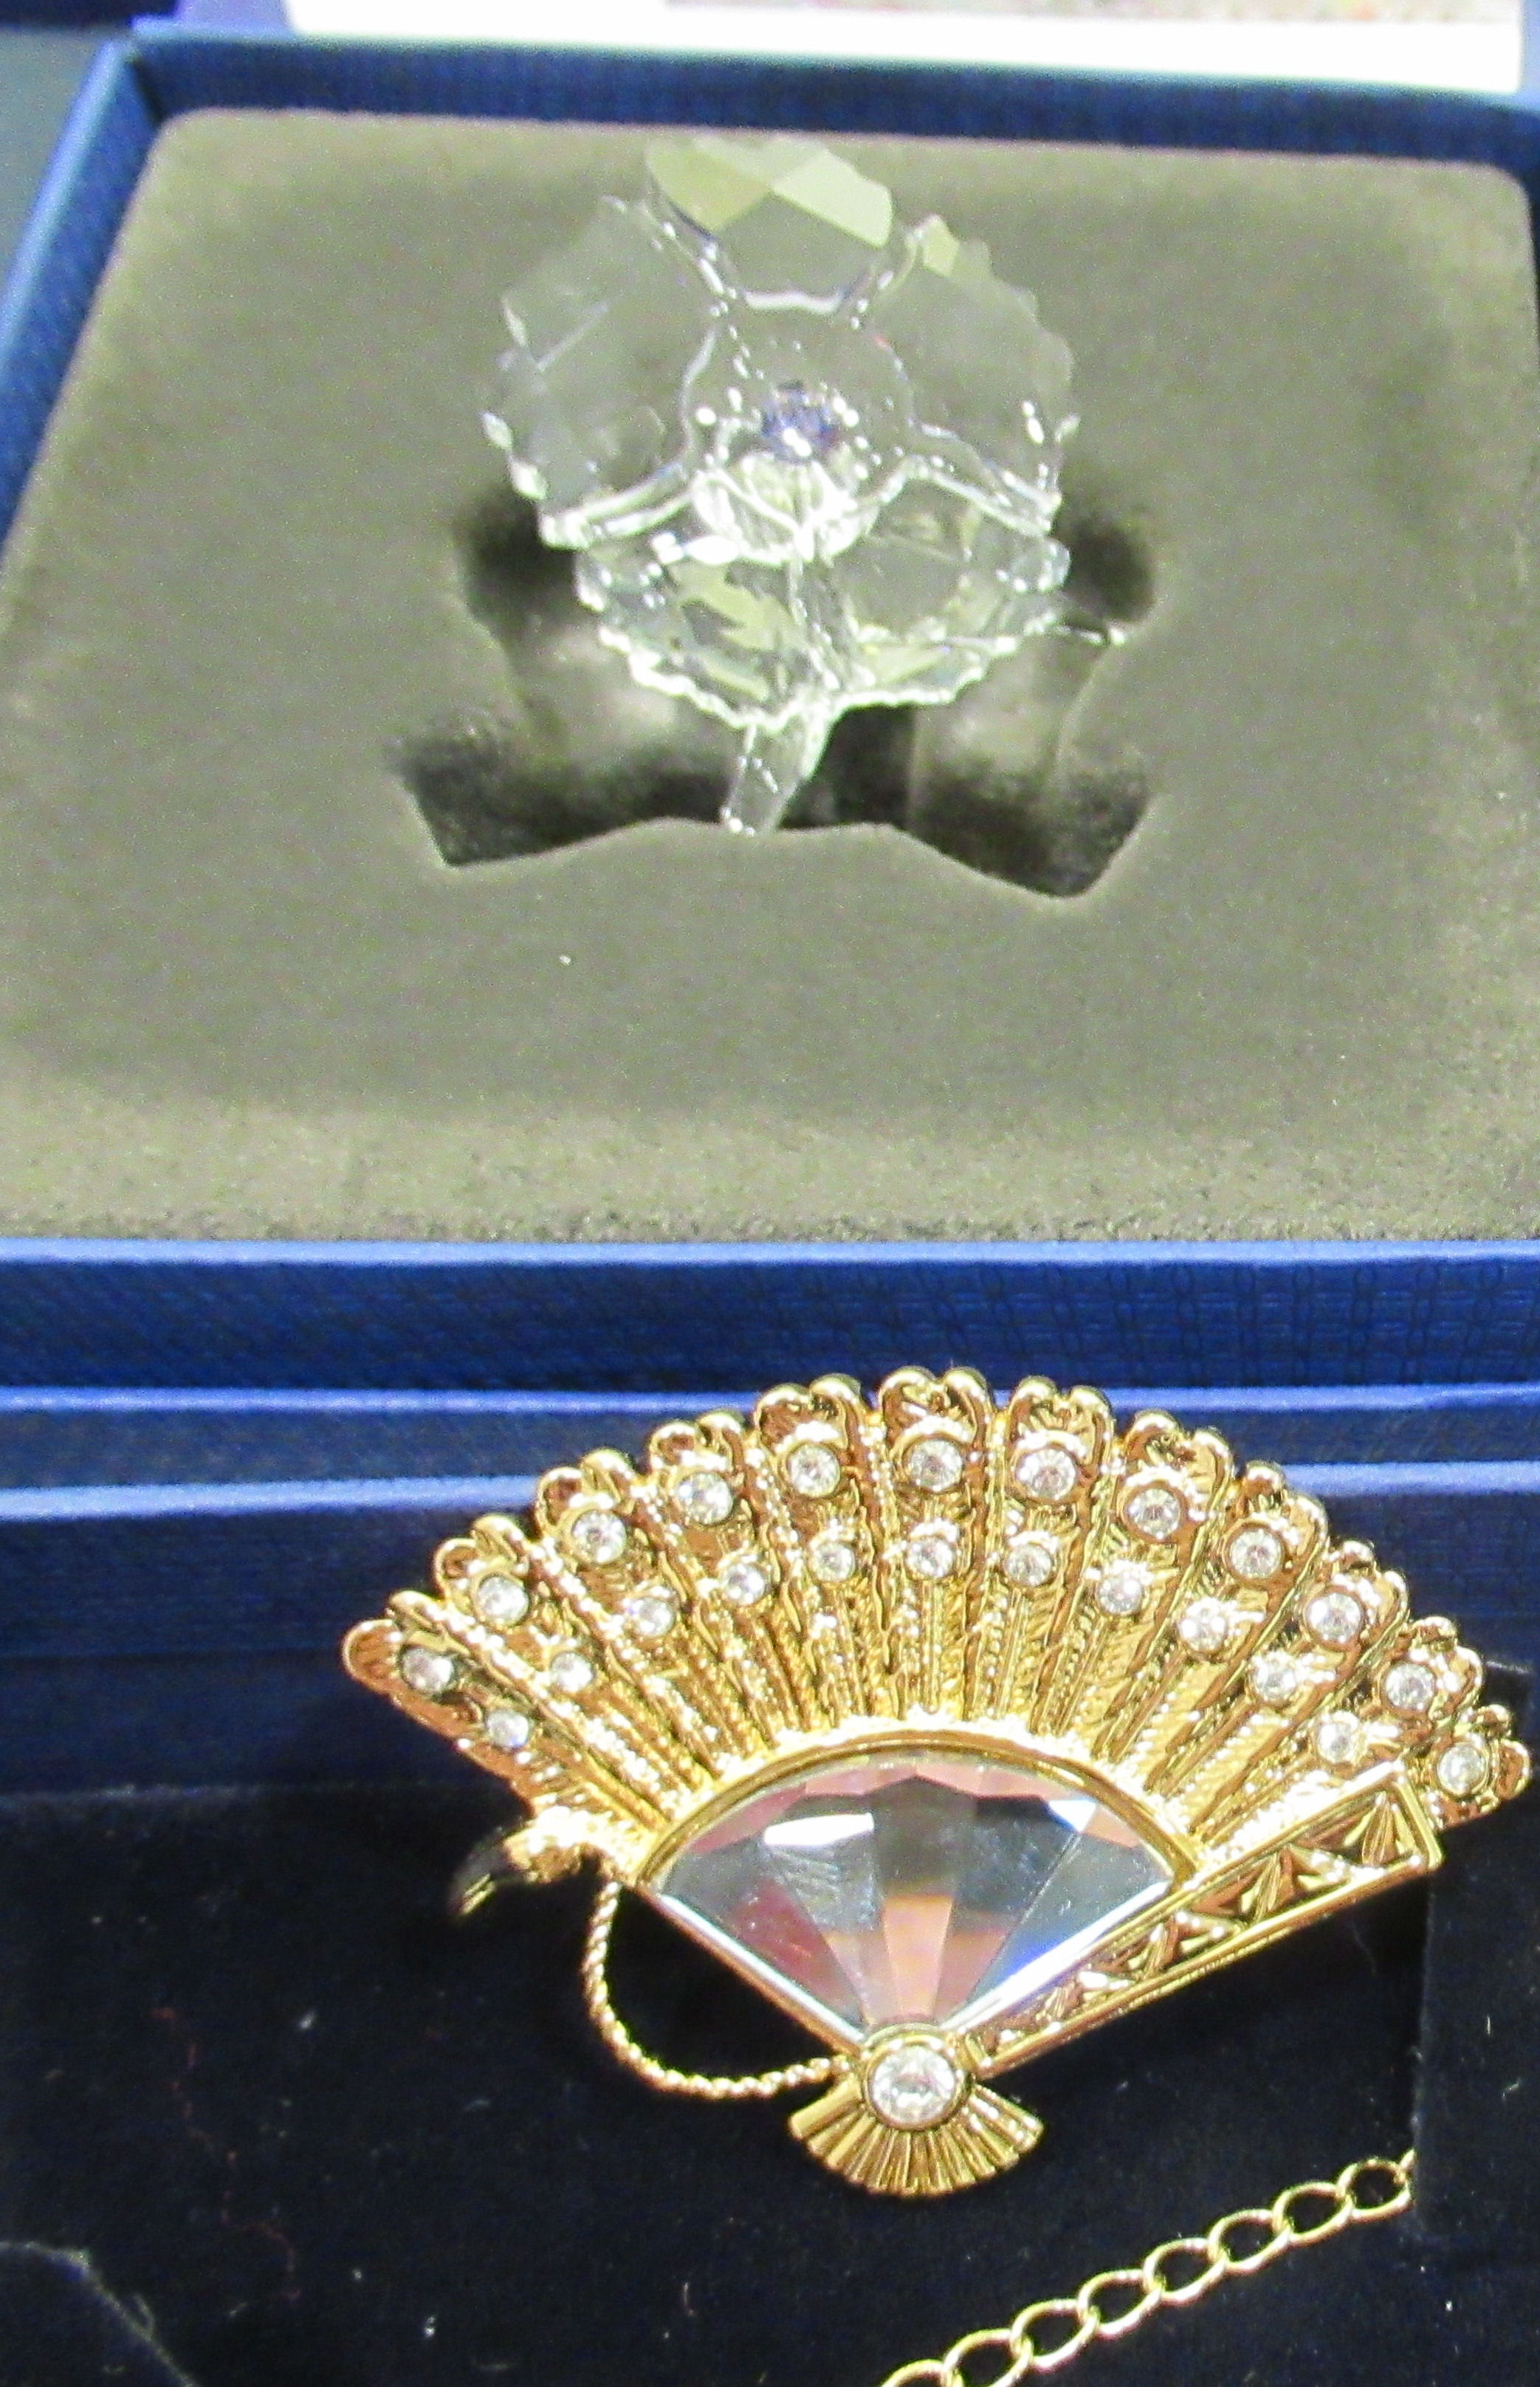 Swarovski crystal jewellery: to include a fan design brooch, - Image 4 of 4